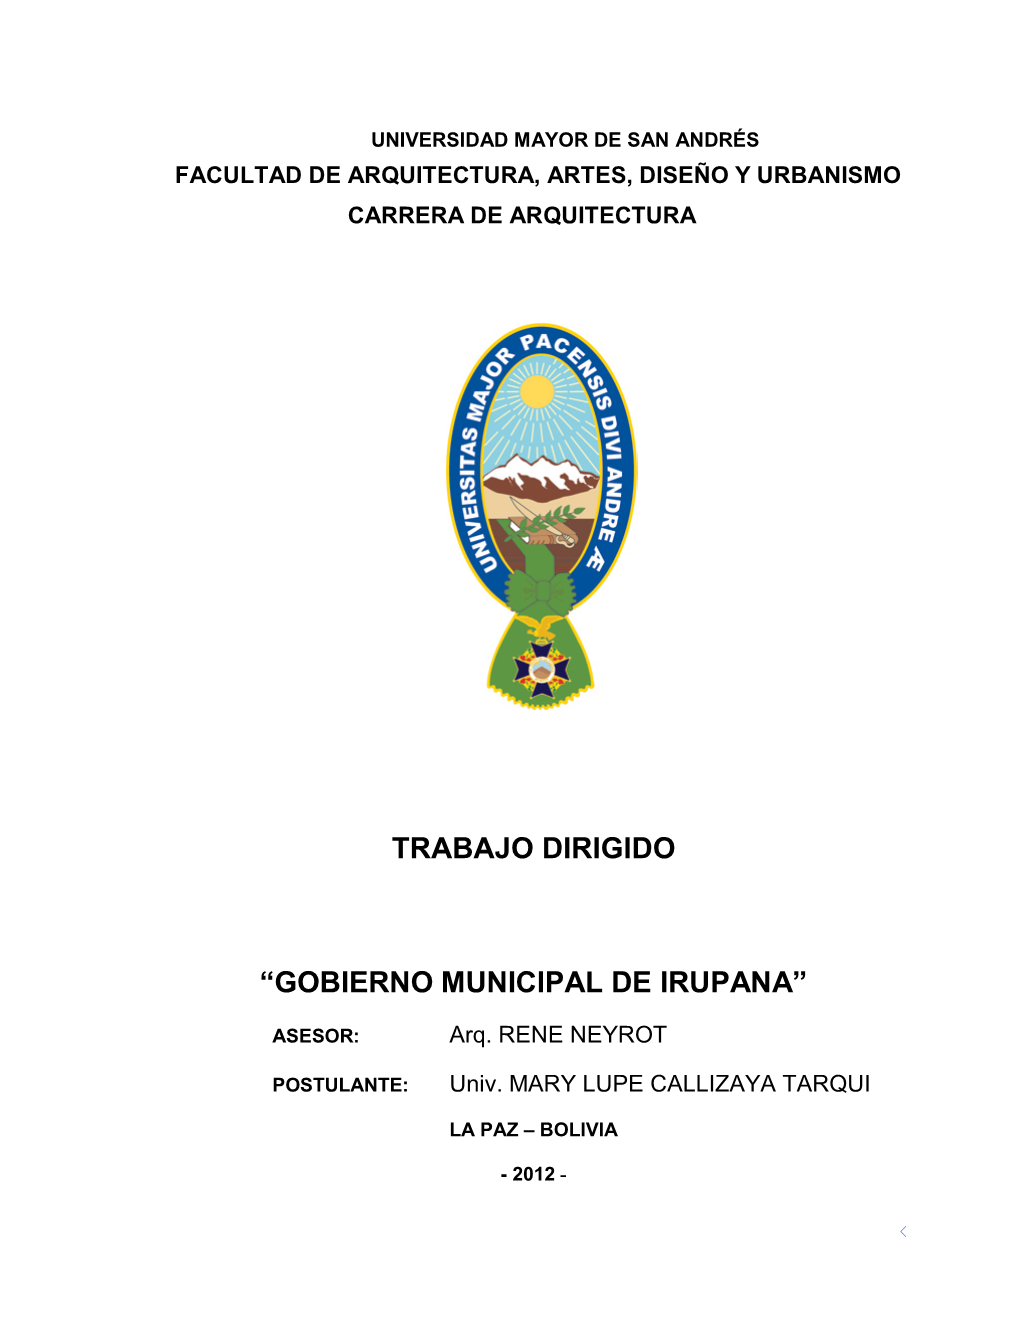 Trabajo Dirigido “Gobierno Municipal De Irupana”